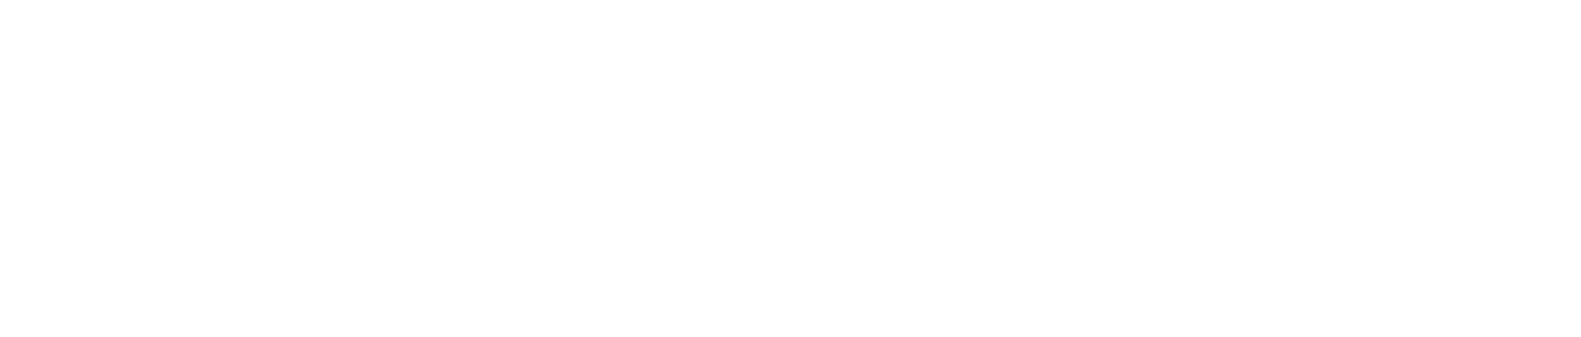 Pagaya Technologies logo large for dark backgrounds (transparent PNG)